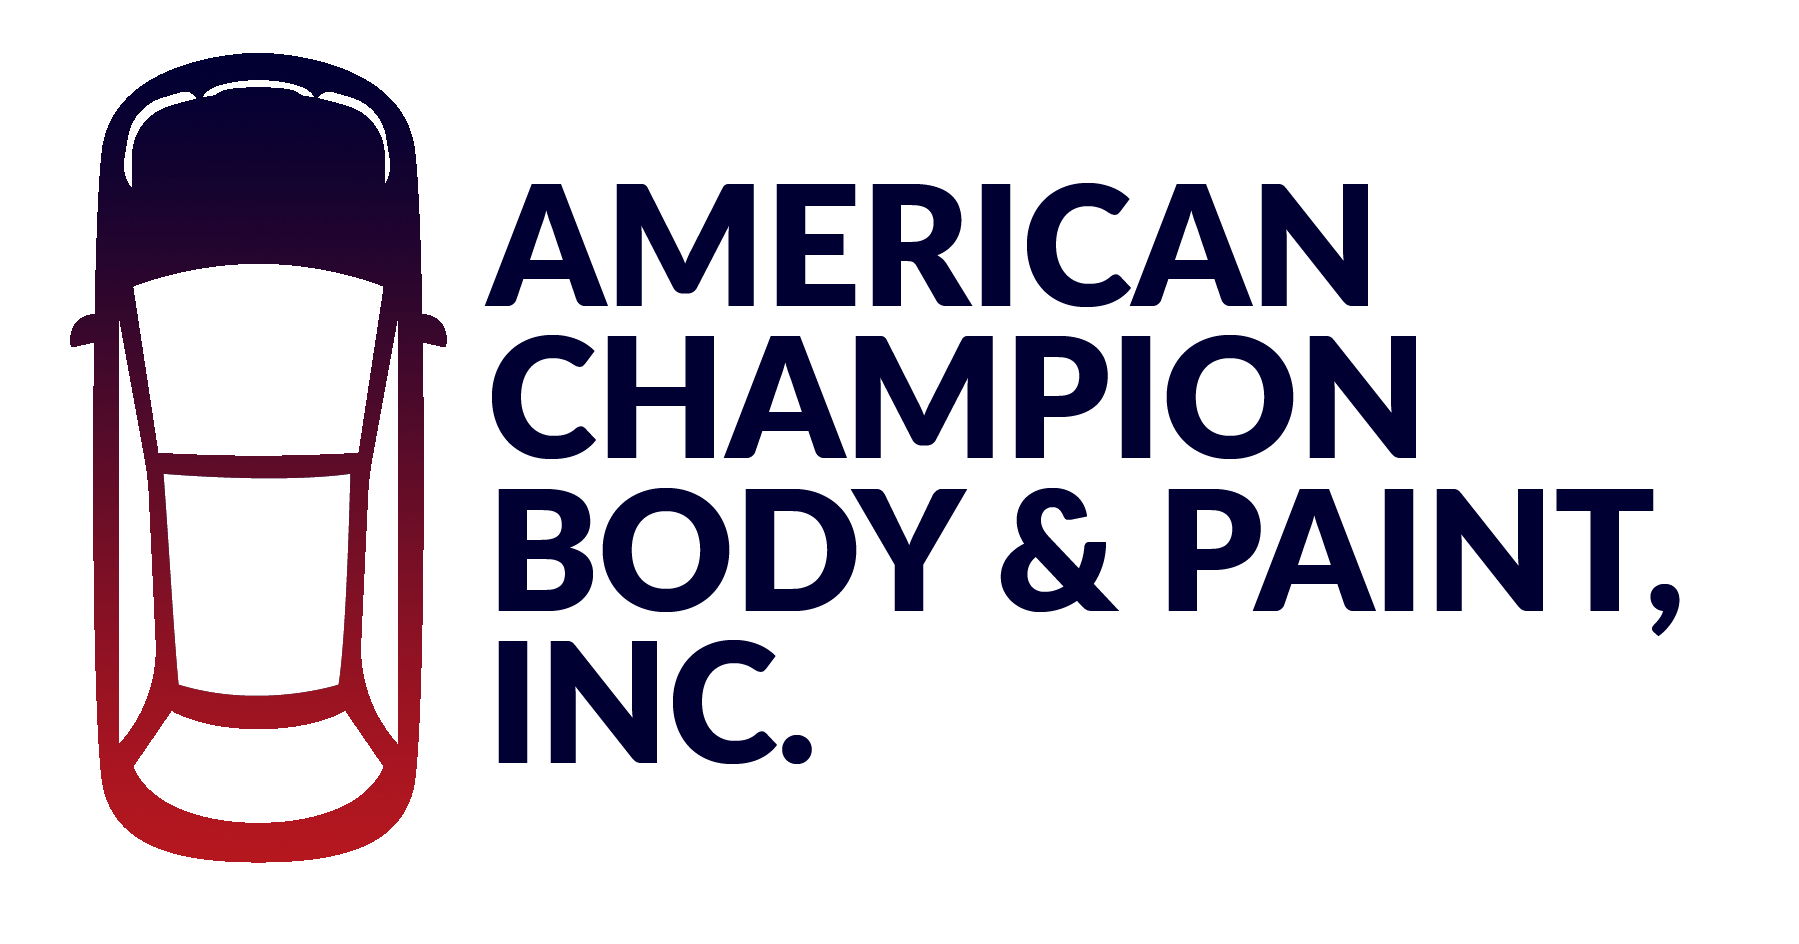 American Champion Body & Paint, Inc.